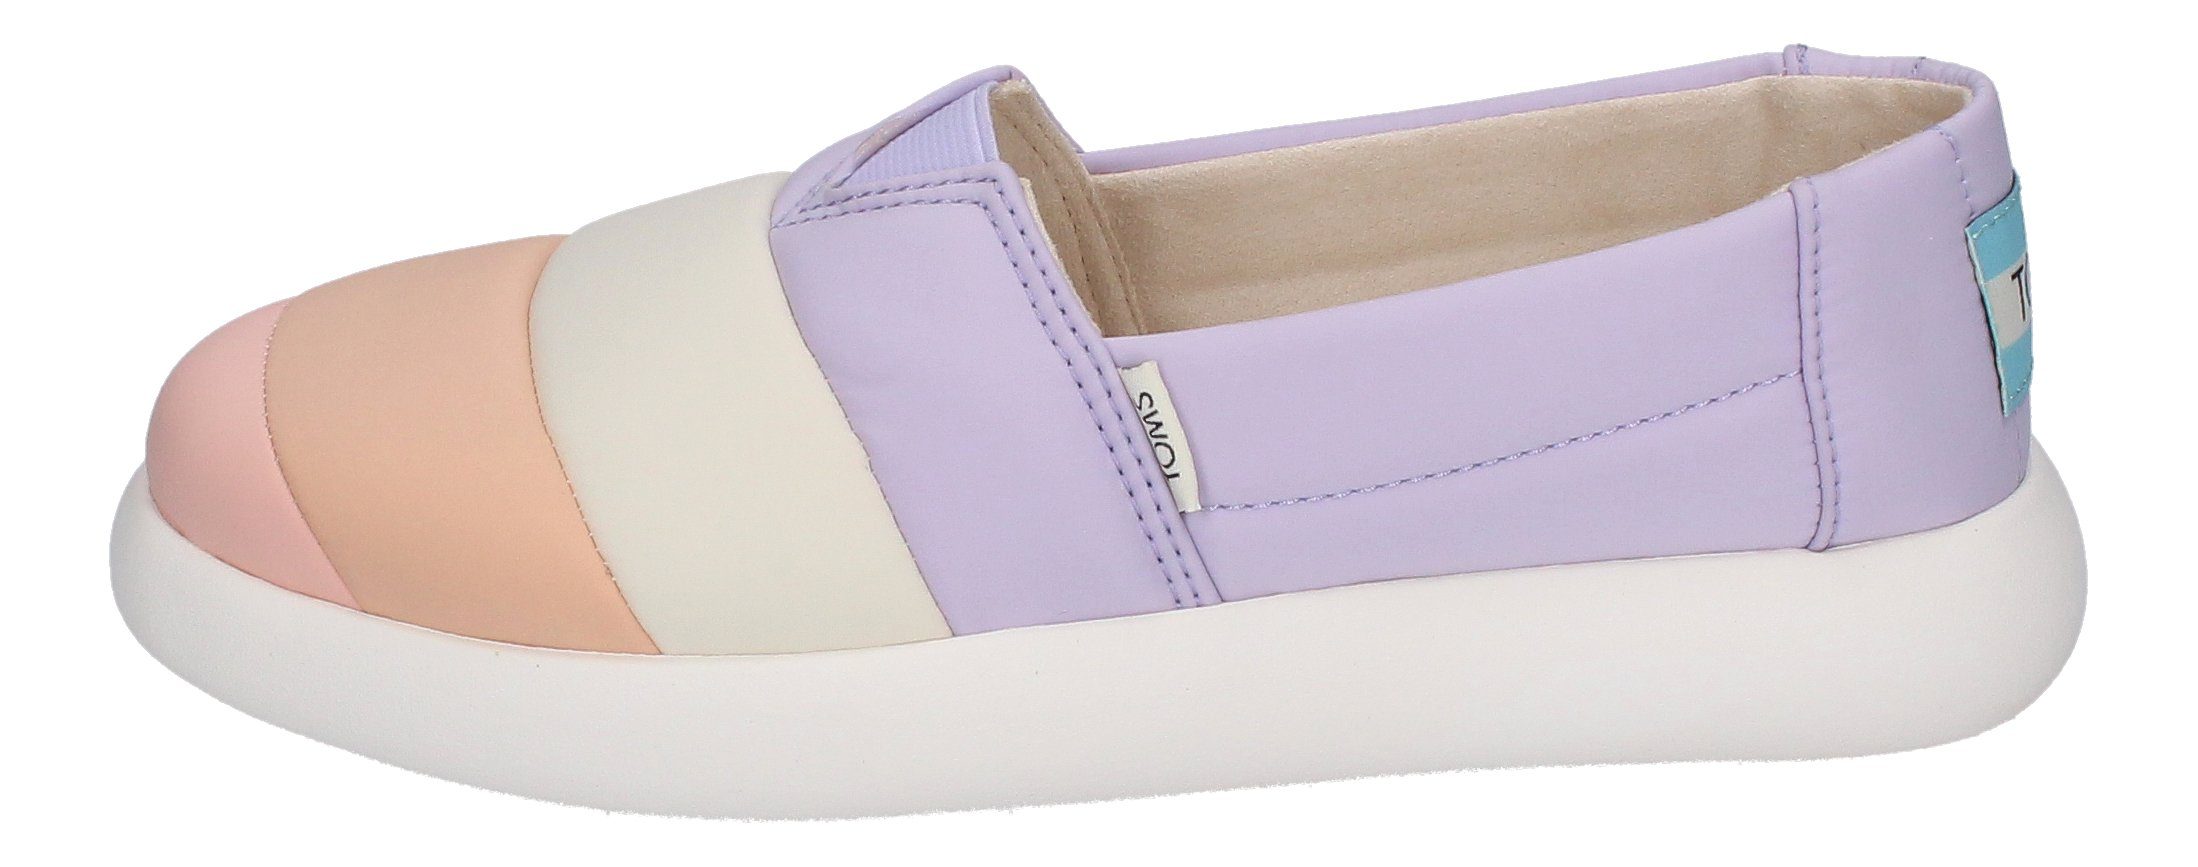 TOMS Purple Slip-On 10016725 Sneaker MALLOW ALPARGATA